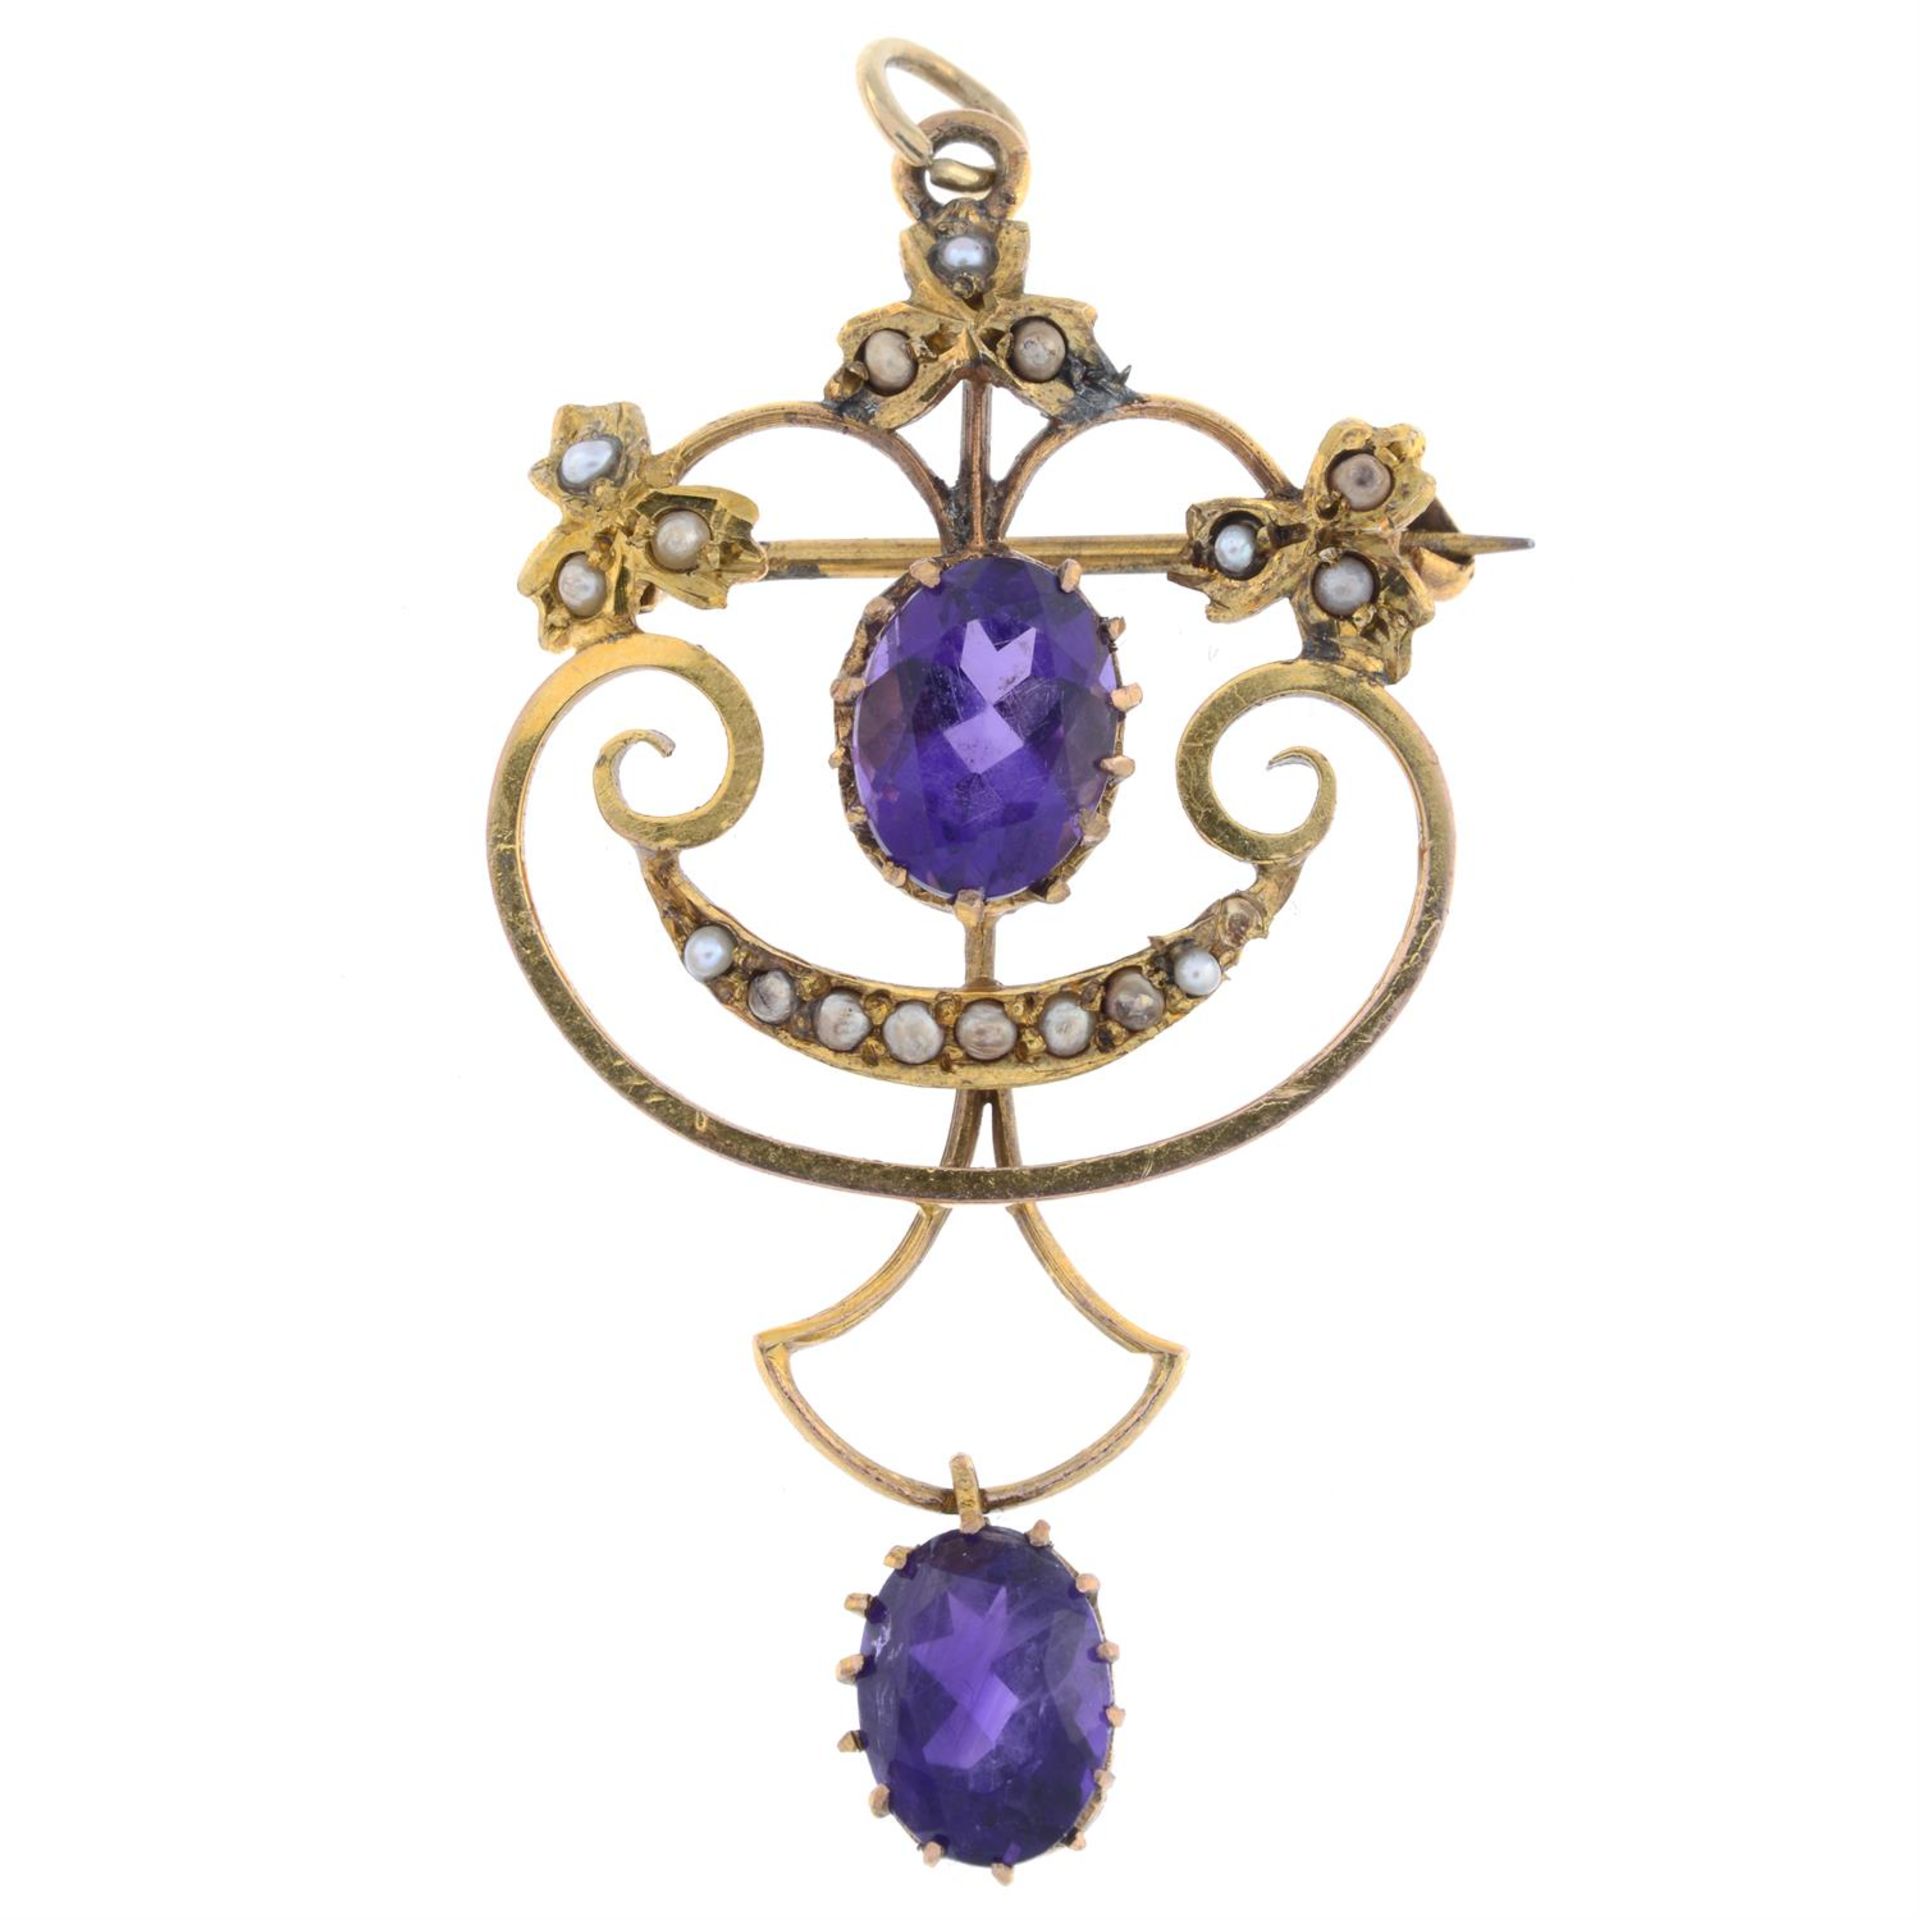 Early 20th century gold gem pendant